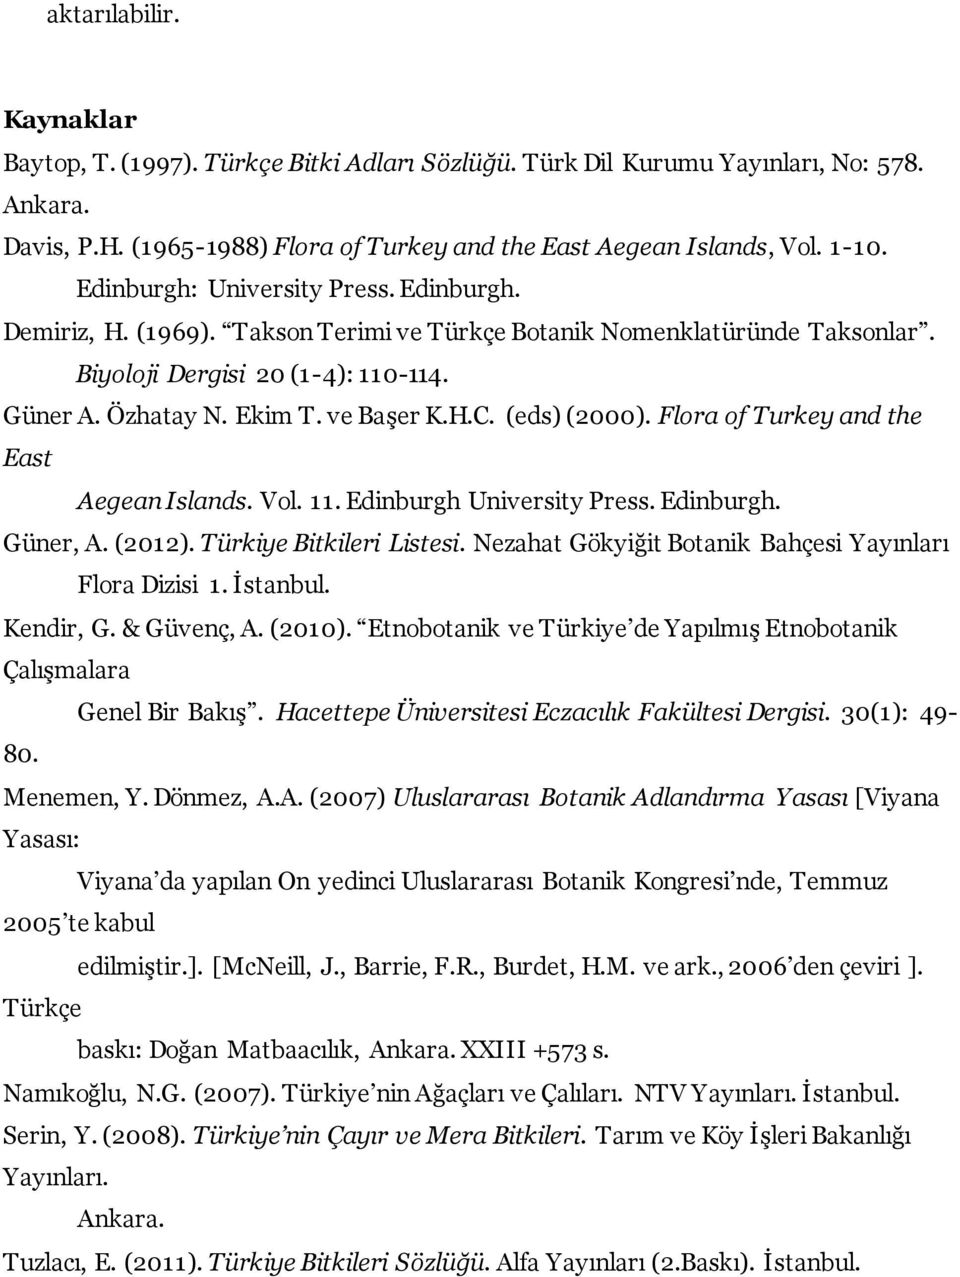 (eds) (2000). Flora of Turkey and the East Aegean Islands. Vol. 11. Edinburgh University Press. Edinburgh. Güner, A. (2012). Türkiye Bitkileri Listesi.